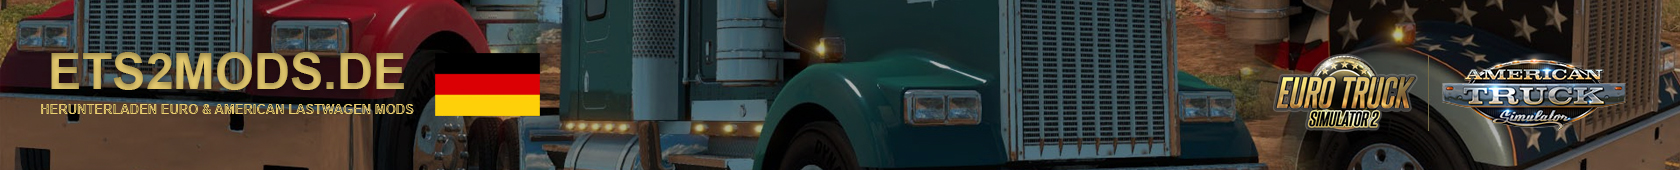 ETS 2 Mods | Euro Truck Simulator 2 mods